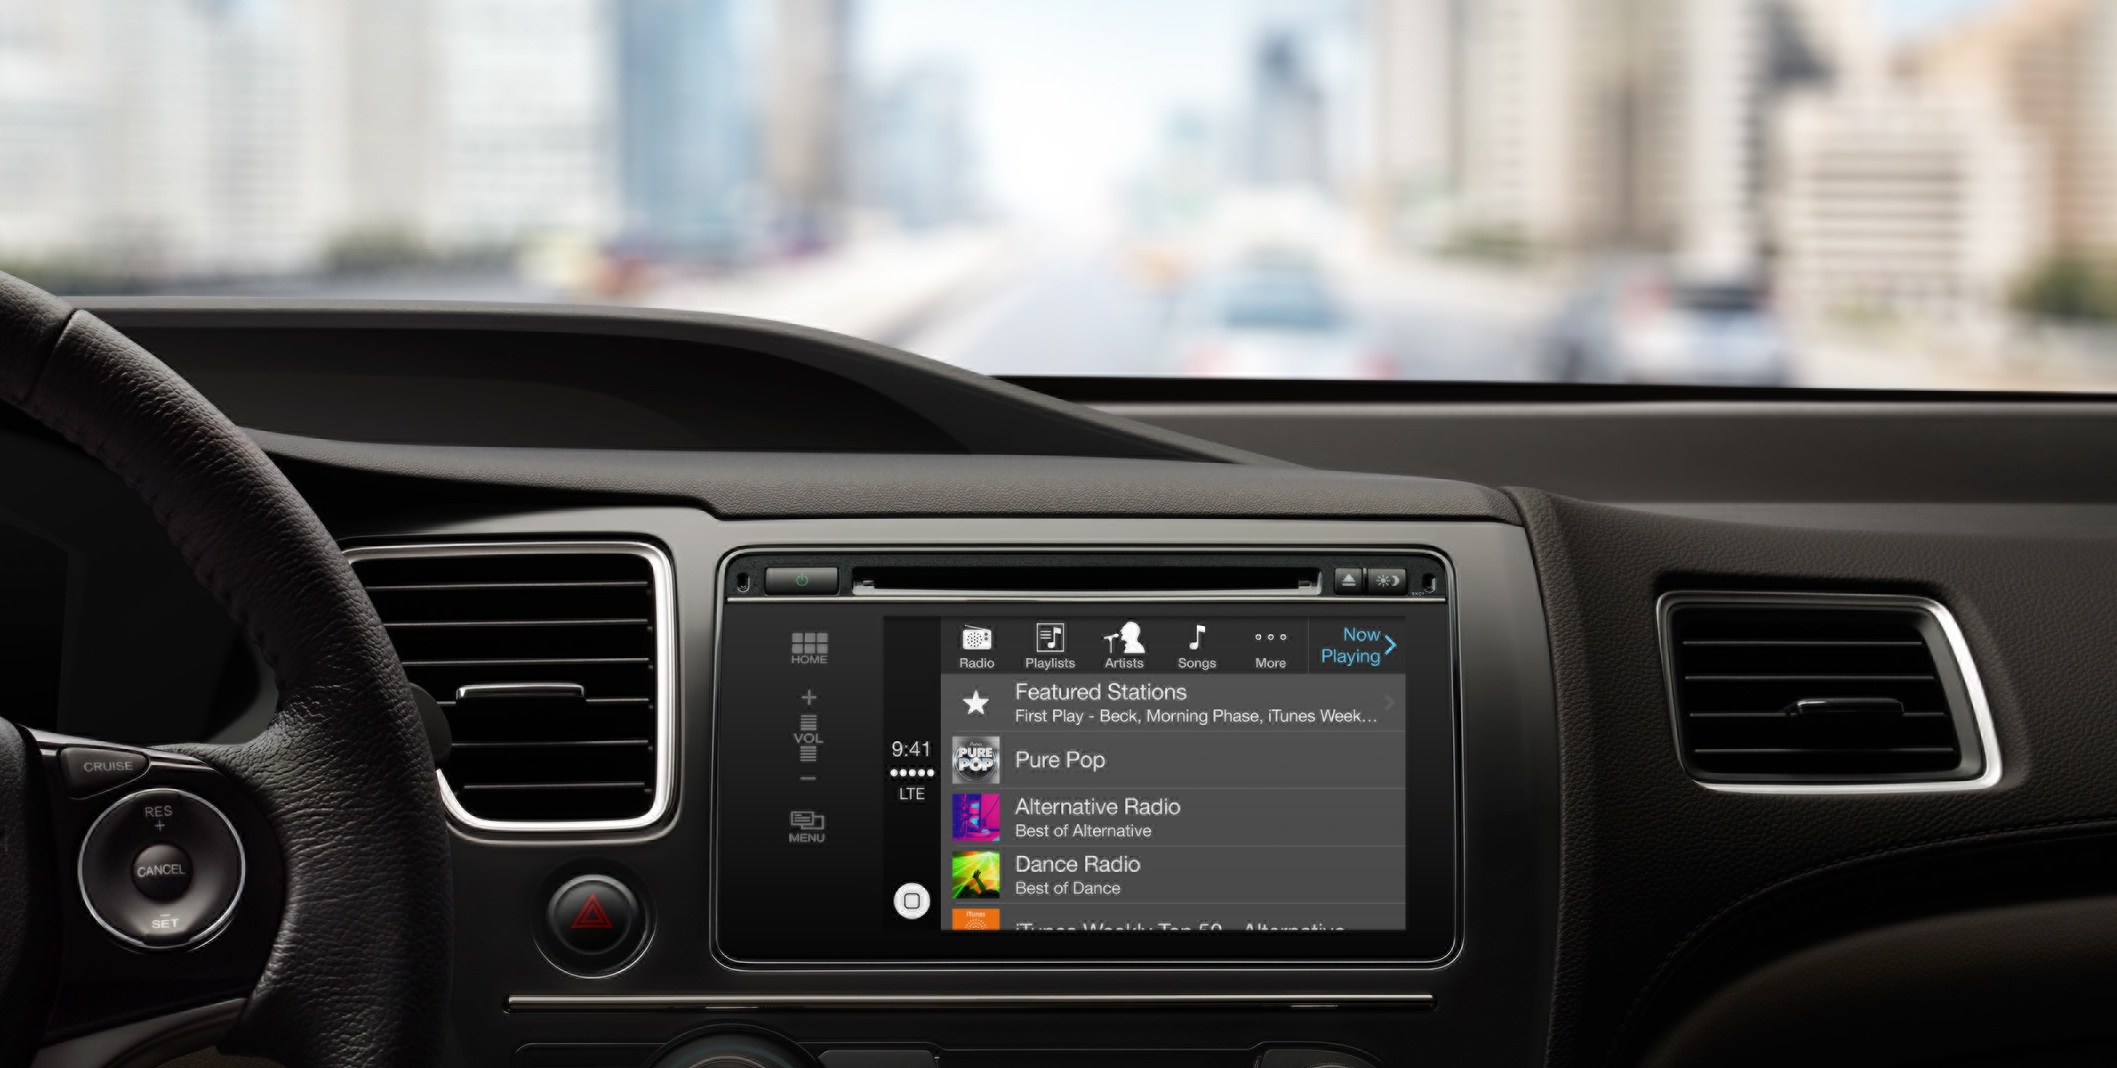 Apple CarPlay: iOS On Your Dashboard